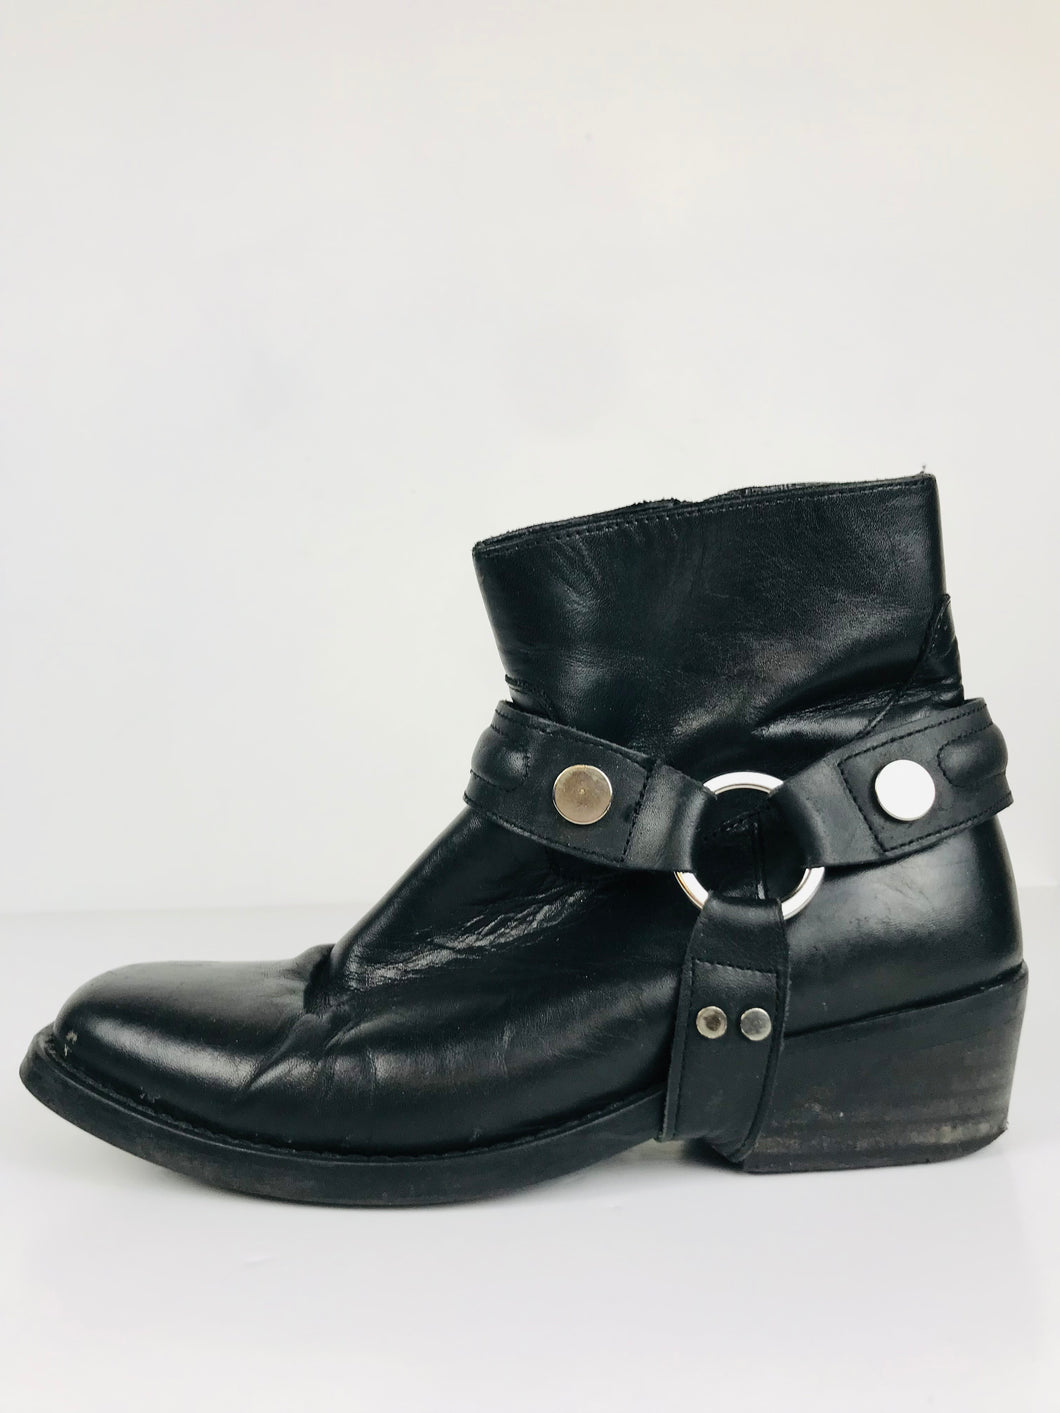 Claudie Pierlot Women's Buckle Boots | 39 UK6 | Black